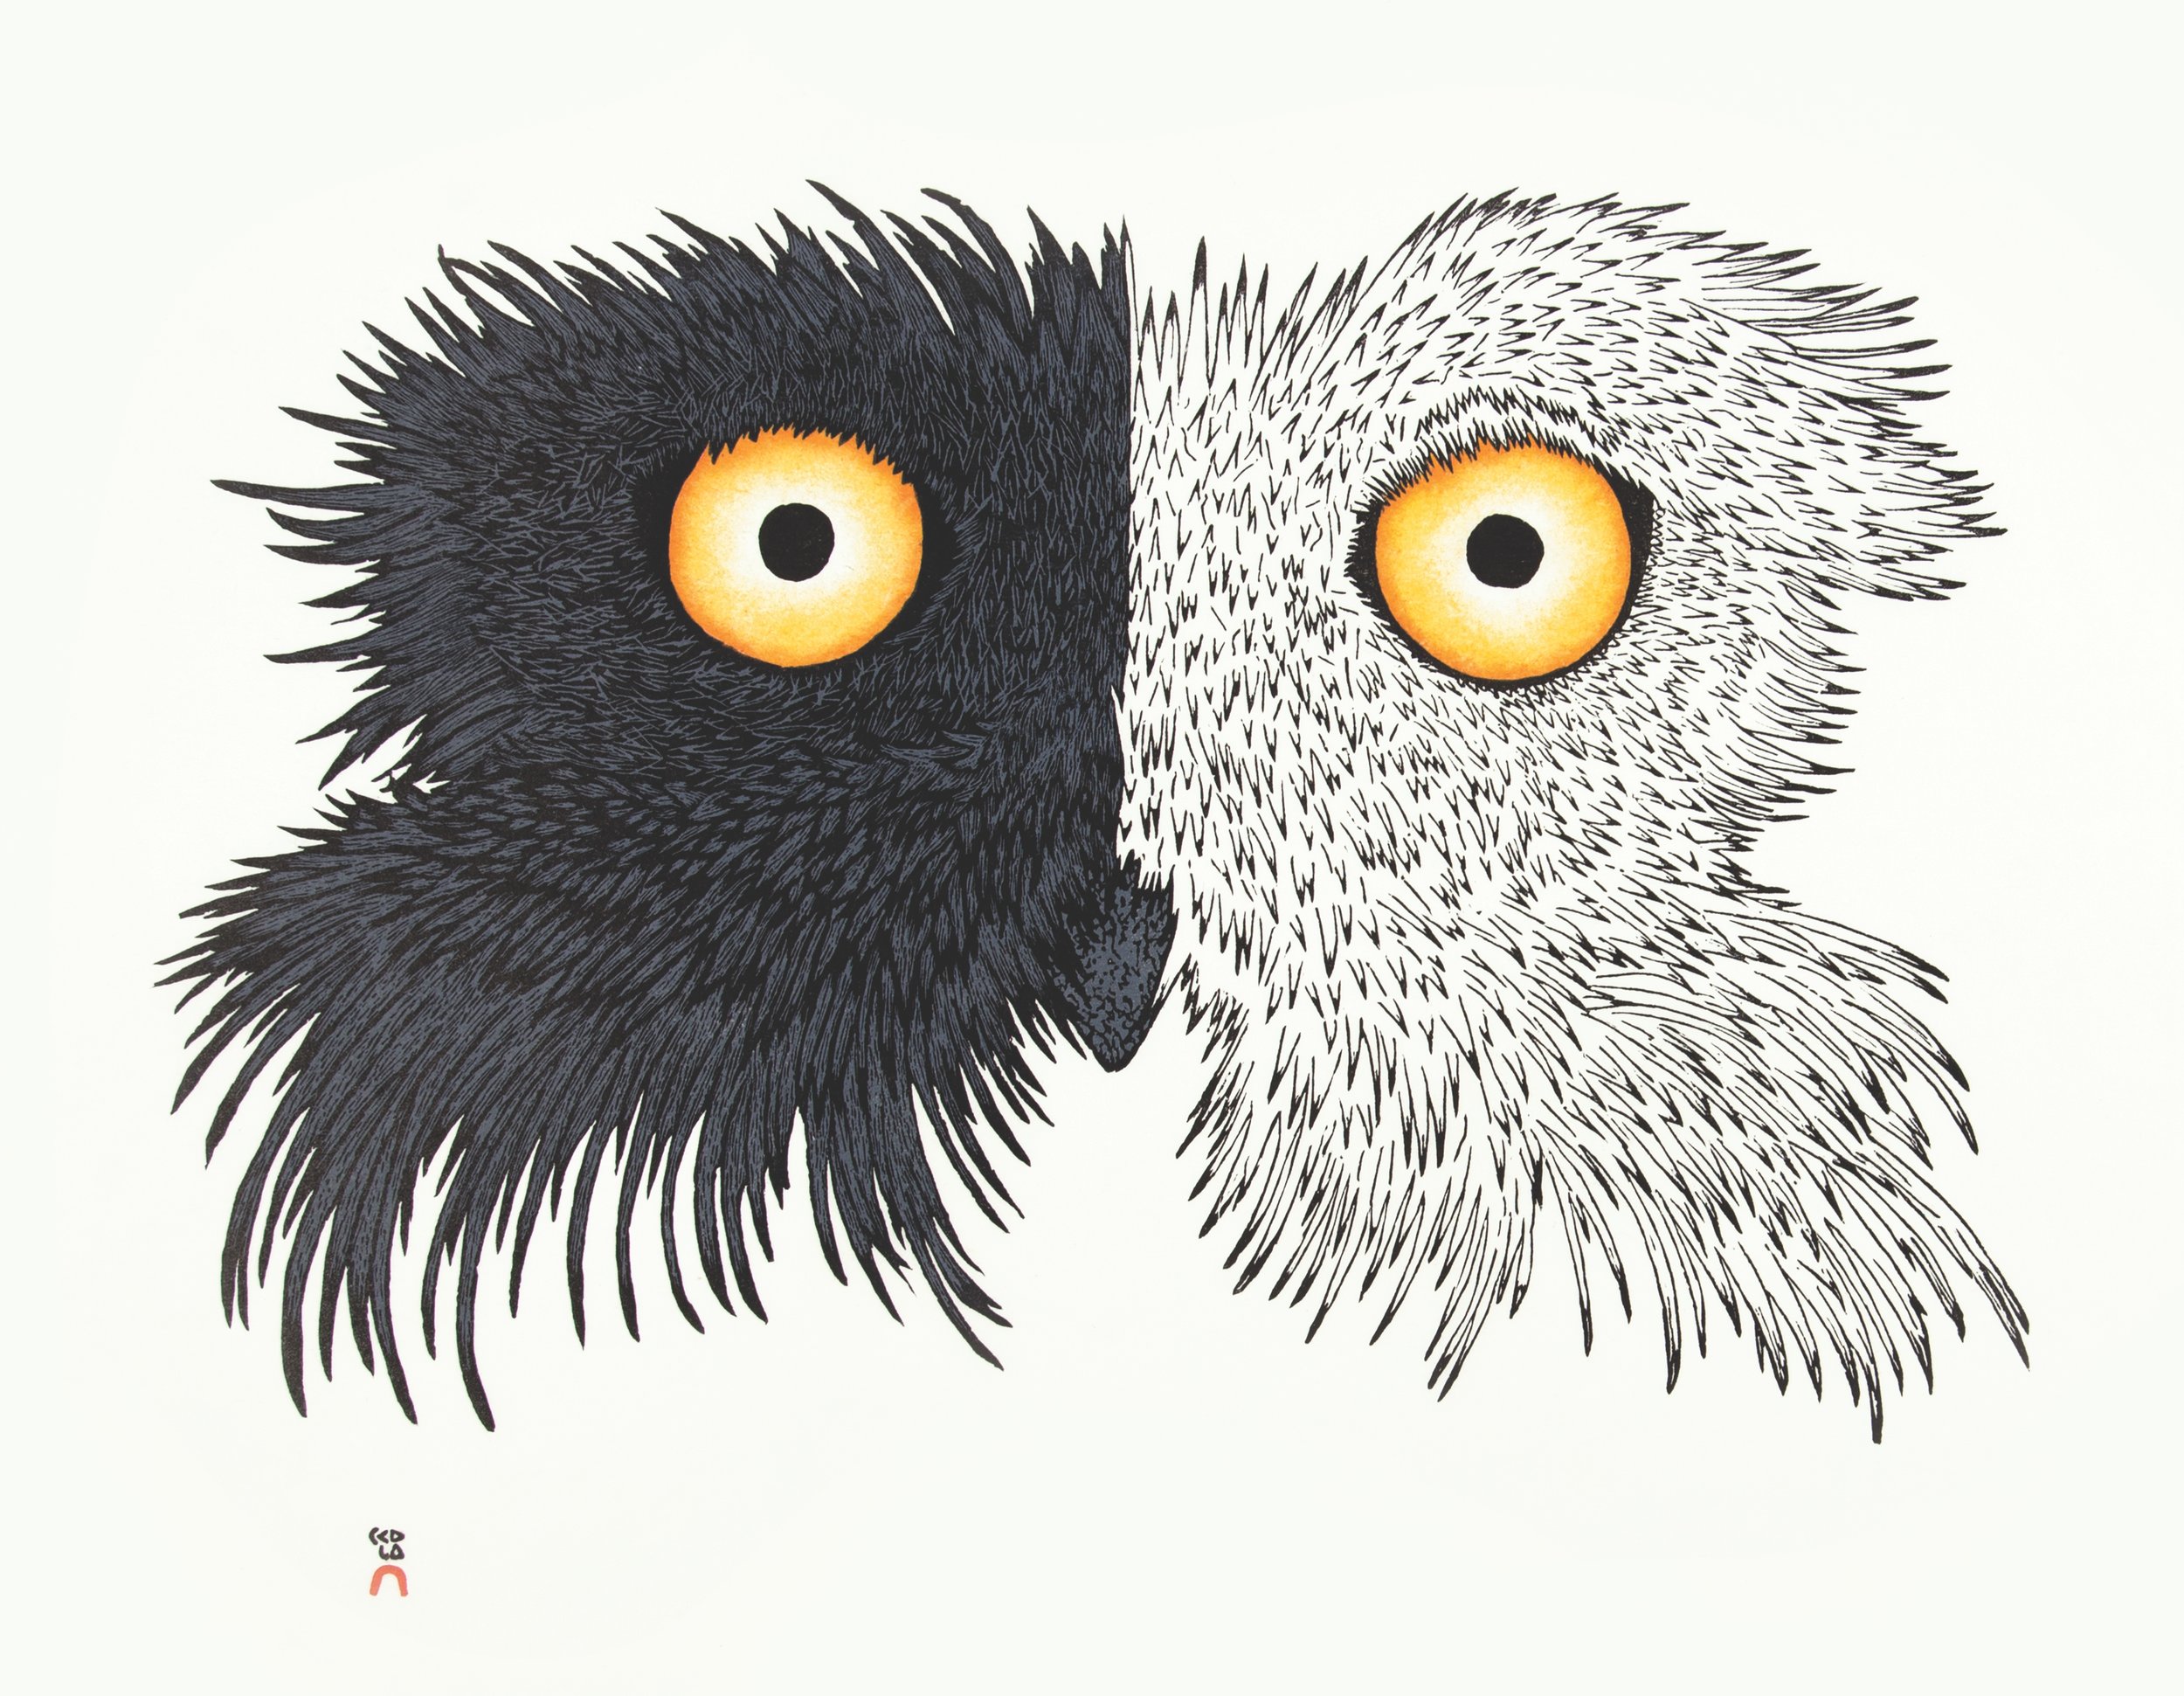 PADLOO SAMAYUALIE
18. Night & Day
Stonecut & Stencil
Paper: Kizuki Kozo White
Printer: Tapaungai Niviaqsi
48 x 61.5 cm
19” x 24 ¼”
$ 800
$640
600